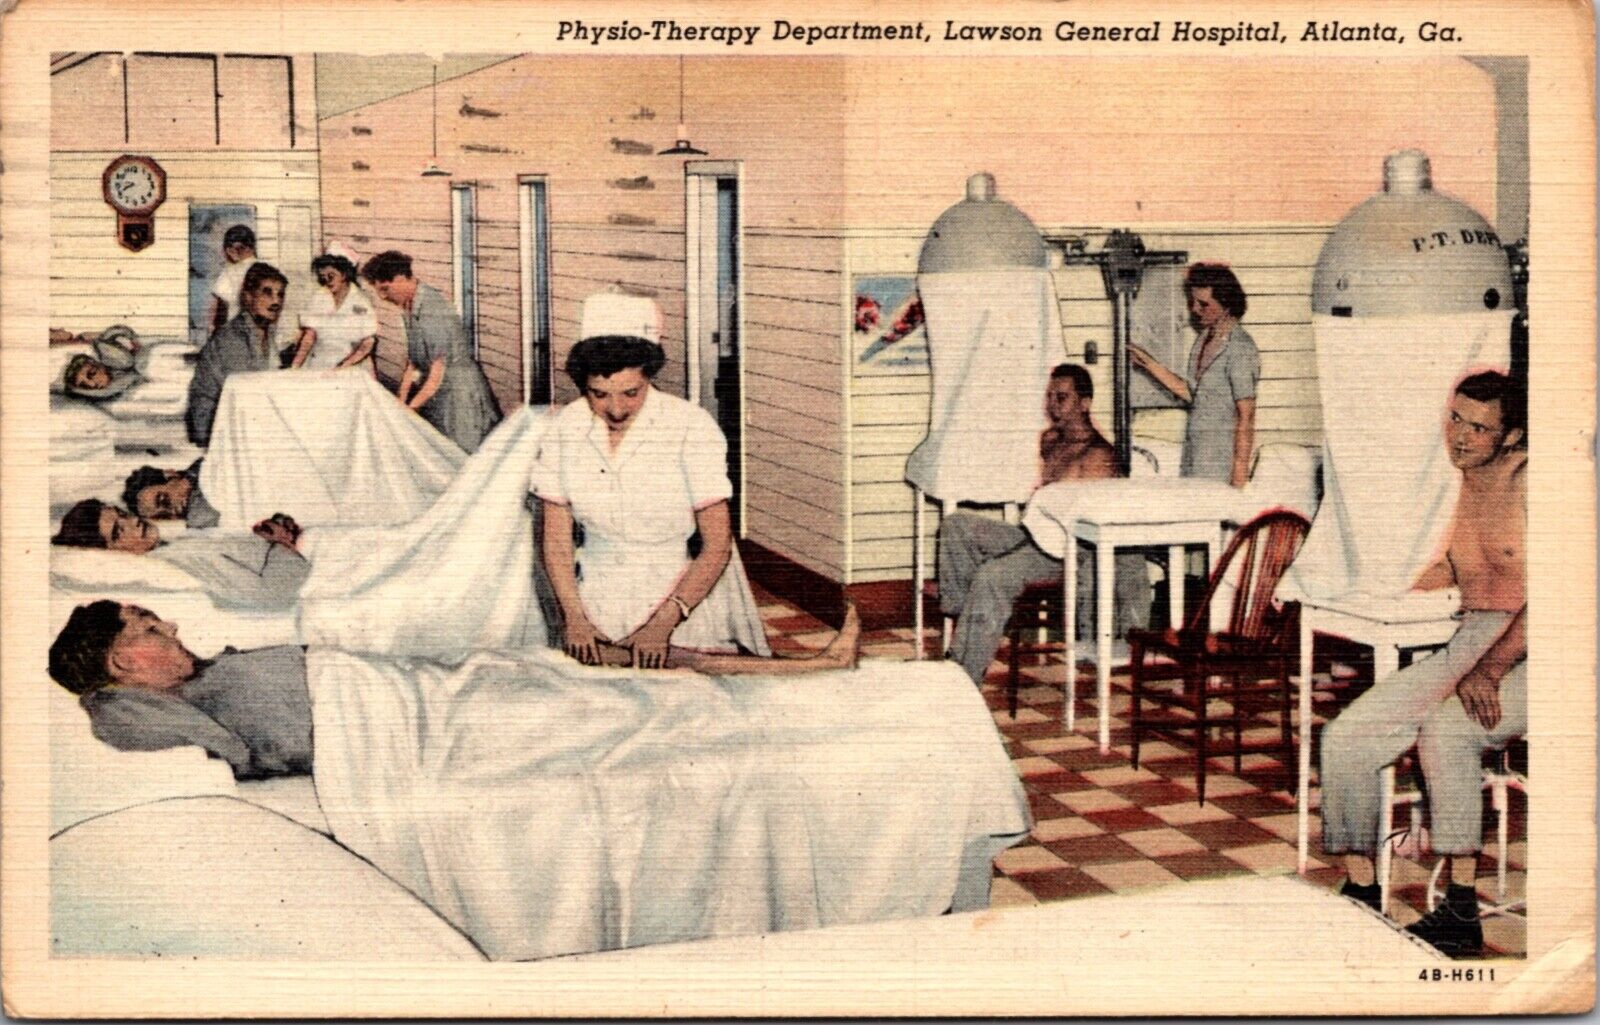 Linen PC Physio-Therapy Department Lawson General Hospital in Atlanta, Georgia